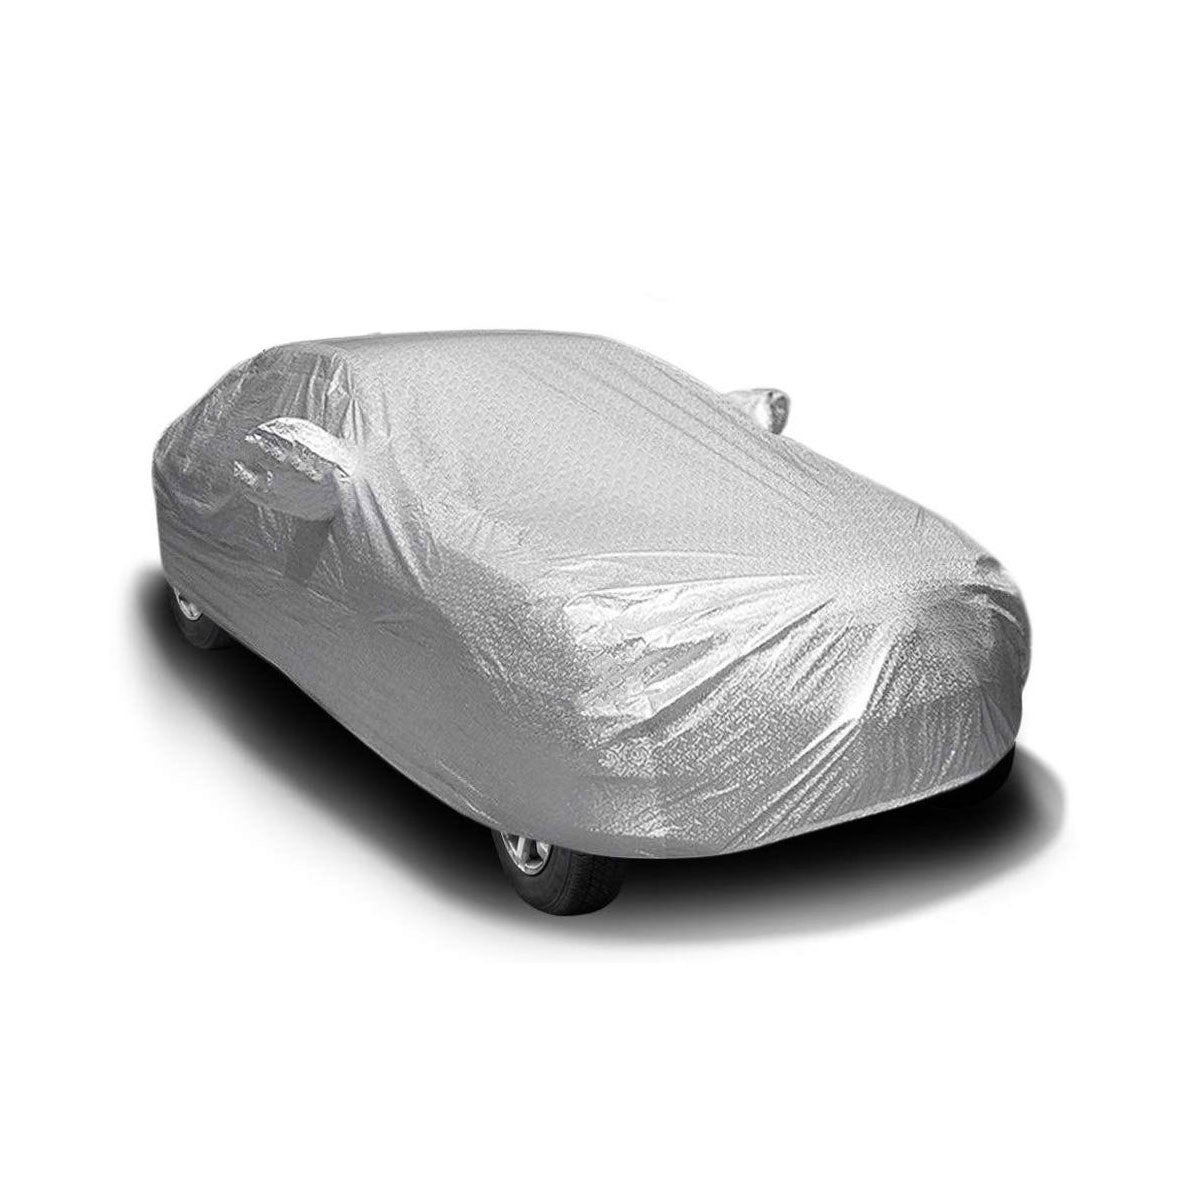 Oshotto Spyro Silver Anti Reflective, dustproof and Water Proof Car Body Cover with Mirror Pockets For Maruti Suzuki Swift Dzire 2008-2011